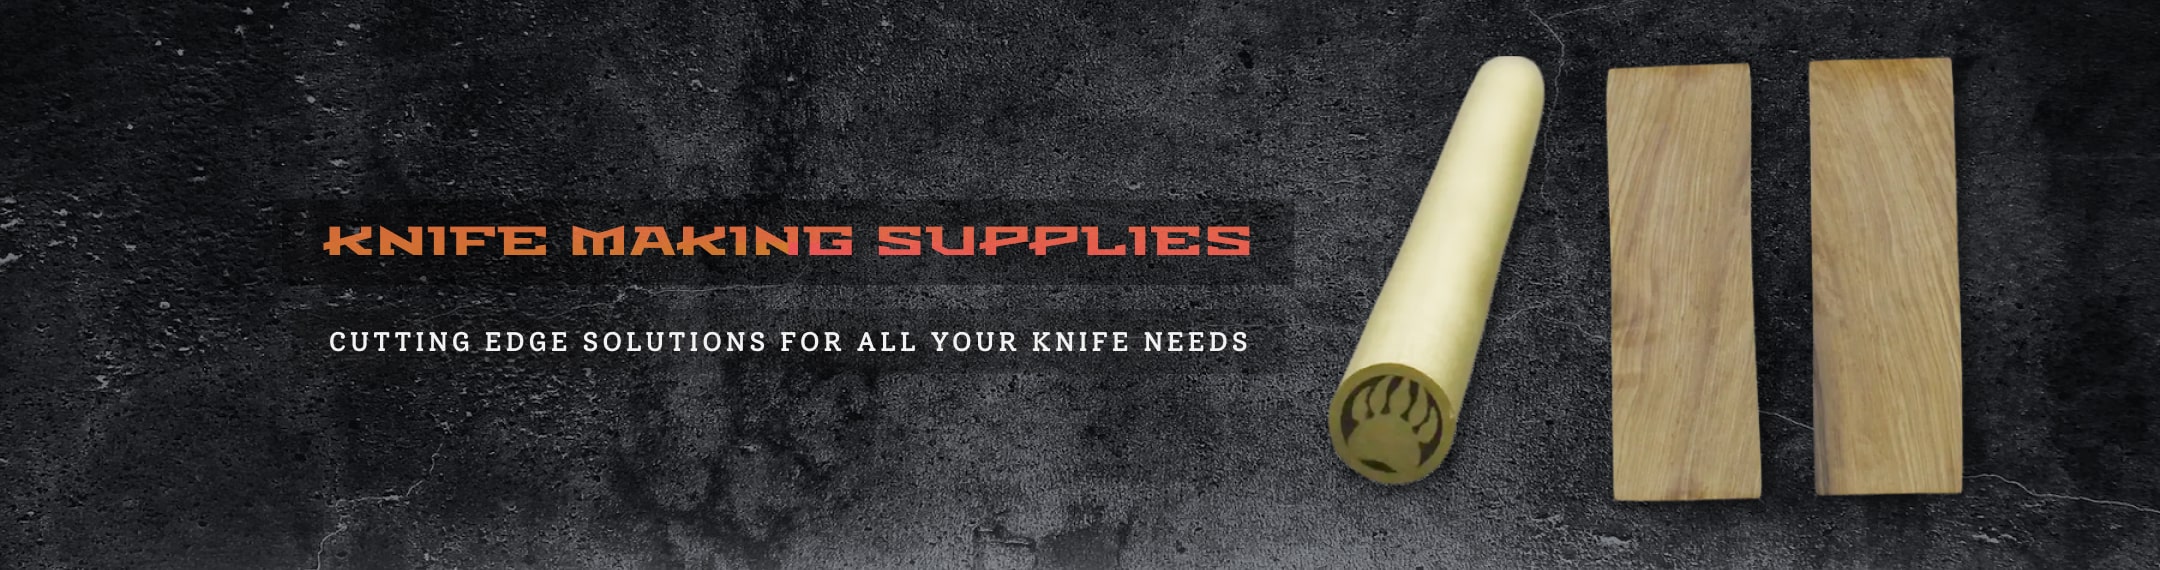 Knife making supplies